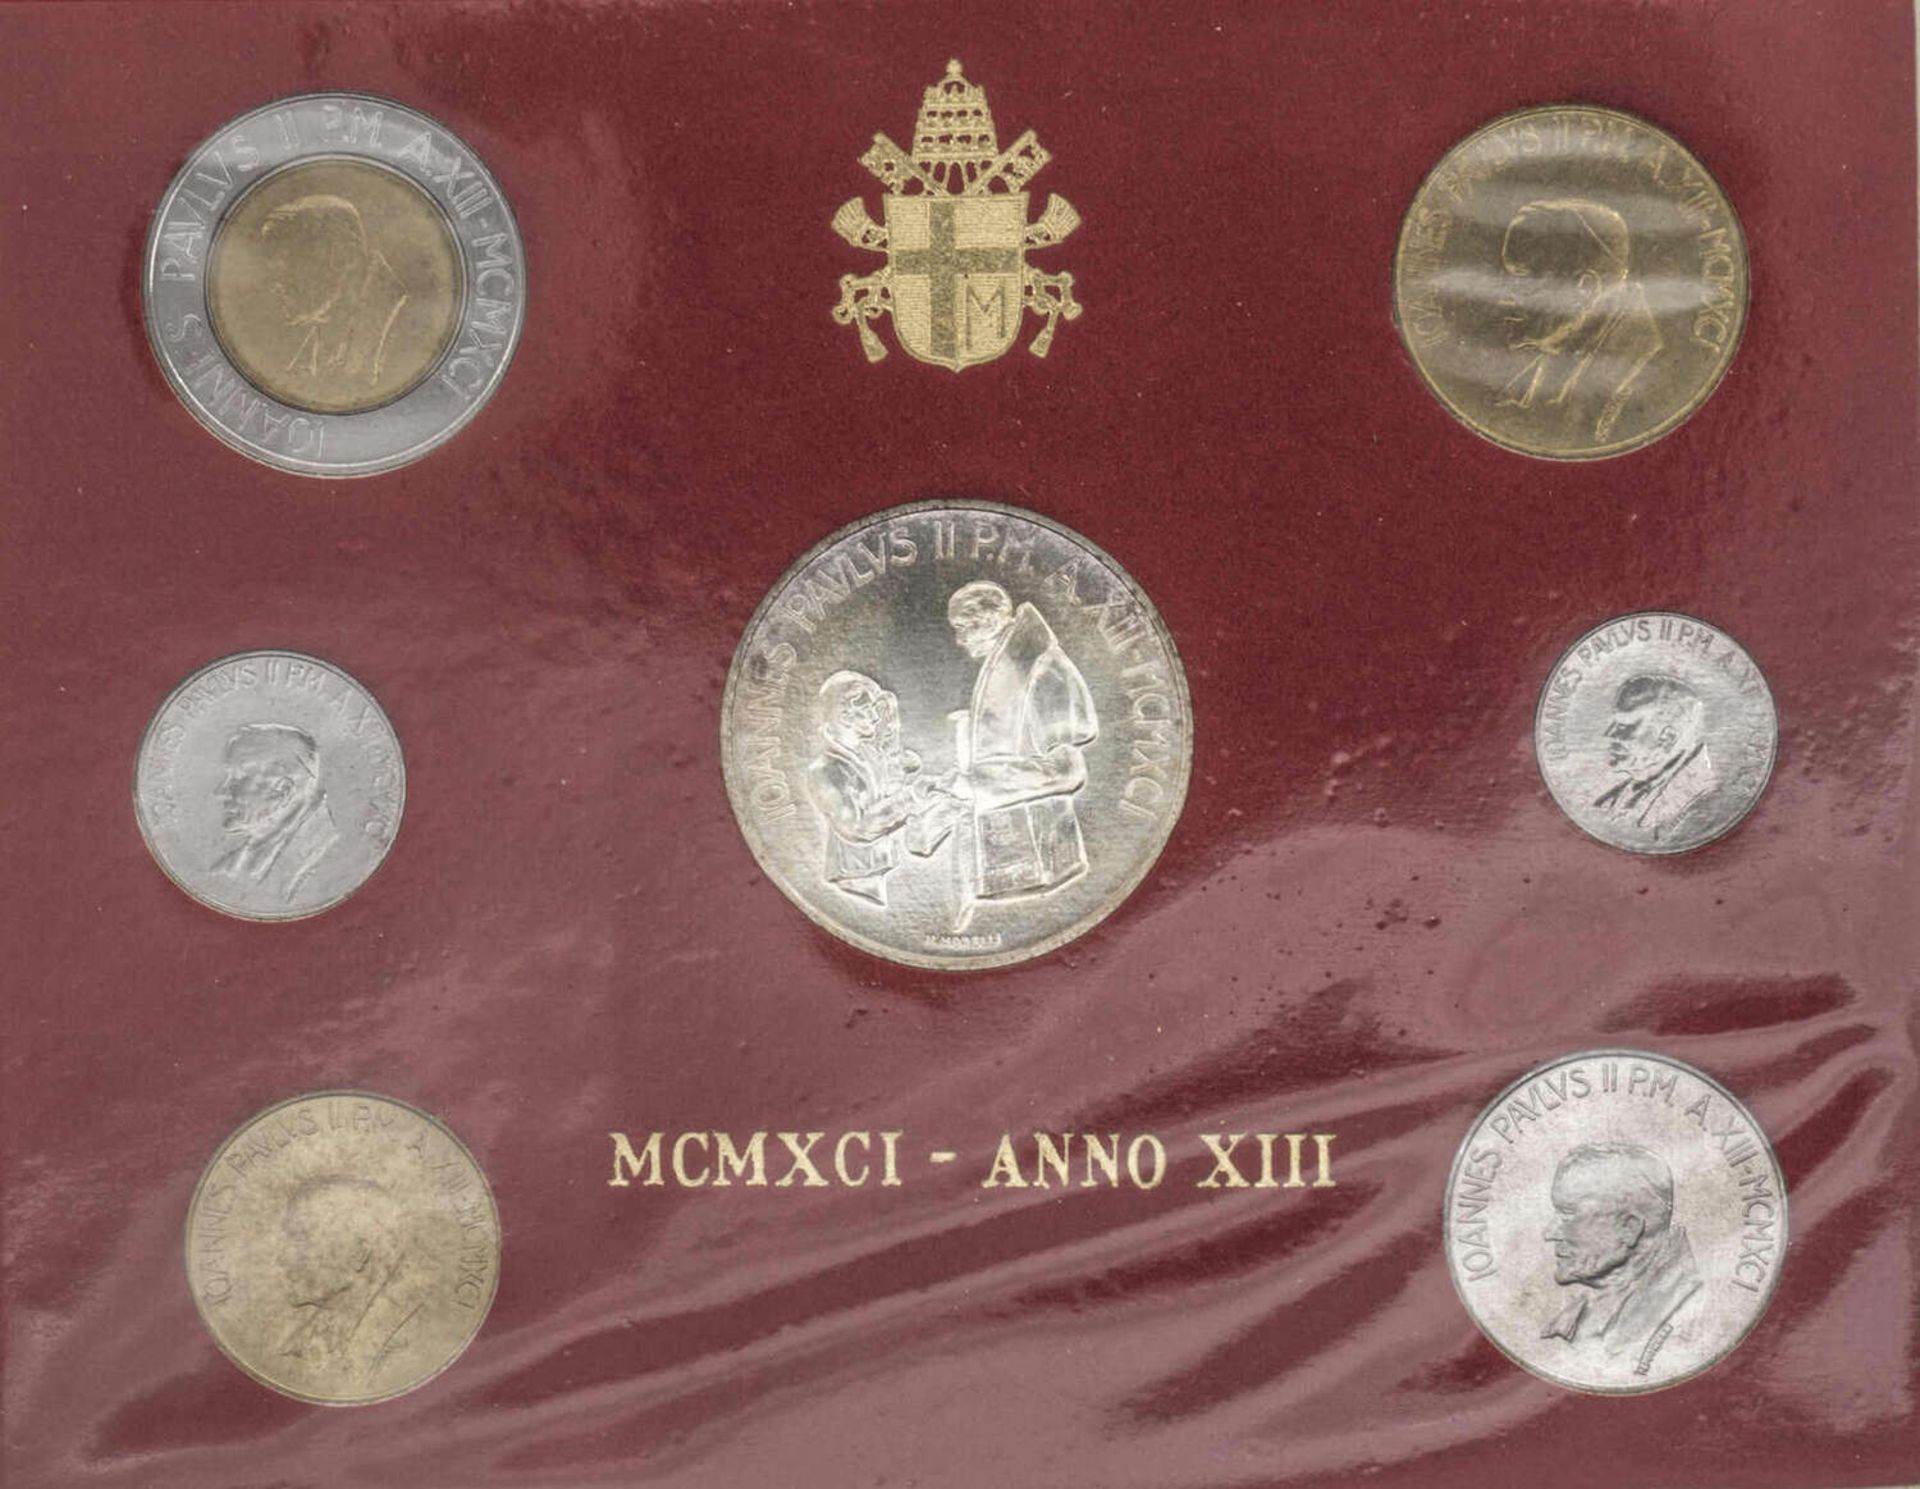 Vatikan 1991, Kursmünzensatz "Johannes Paul II.". Stgl. Vatican 1991, coin set "John Paul II". BU.